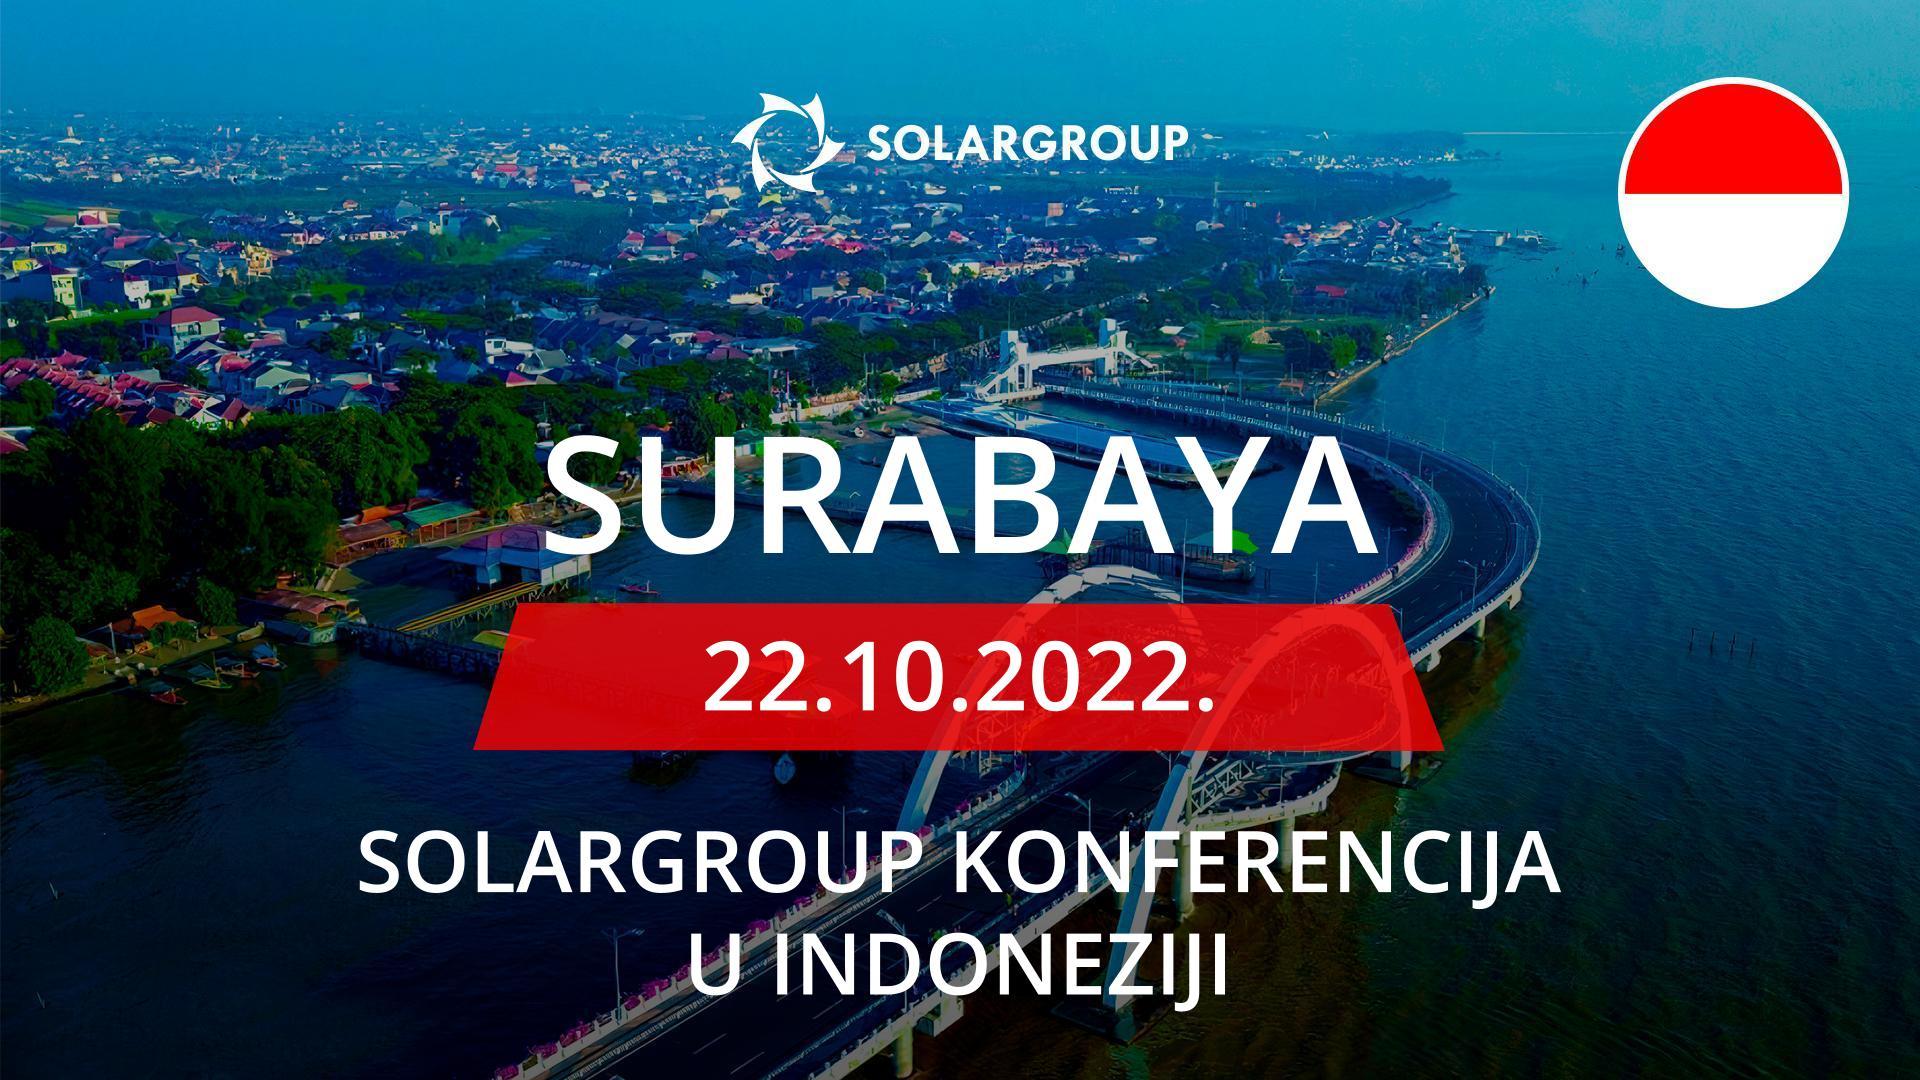 SOLARGROUP konferencija u Indoneziji: 22. listopada, Surabaya